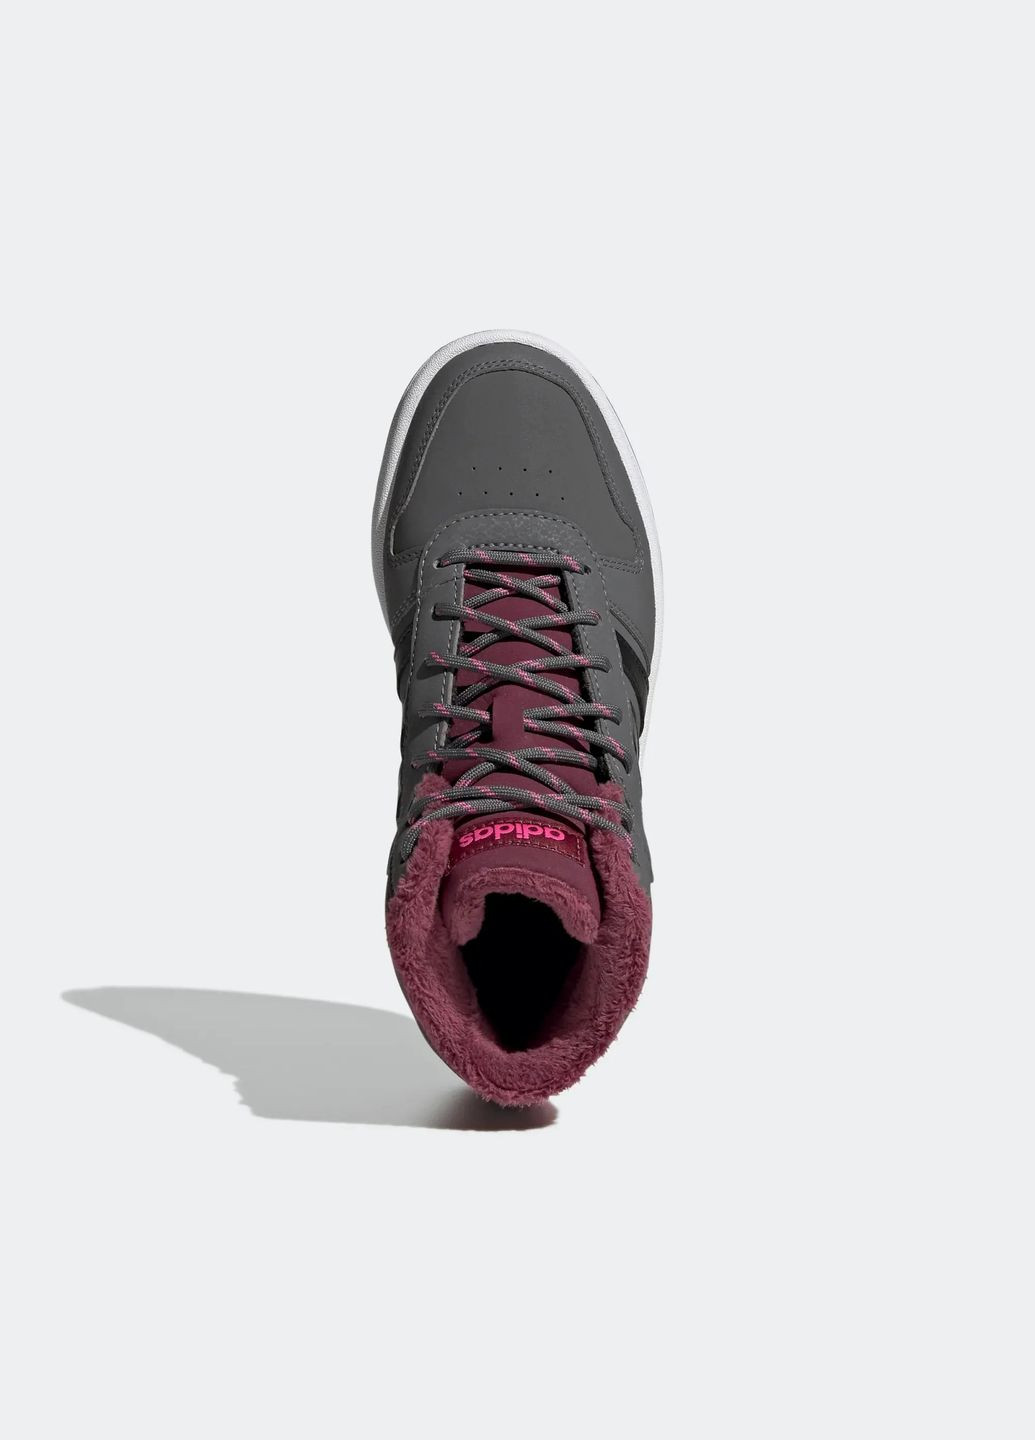 Сірі осінні кросівки kids hoops 2.0 mid grey five/core black/screaming pink р.5.5/38/24.5см adidas